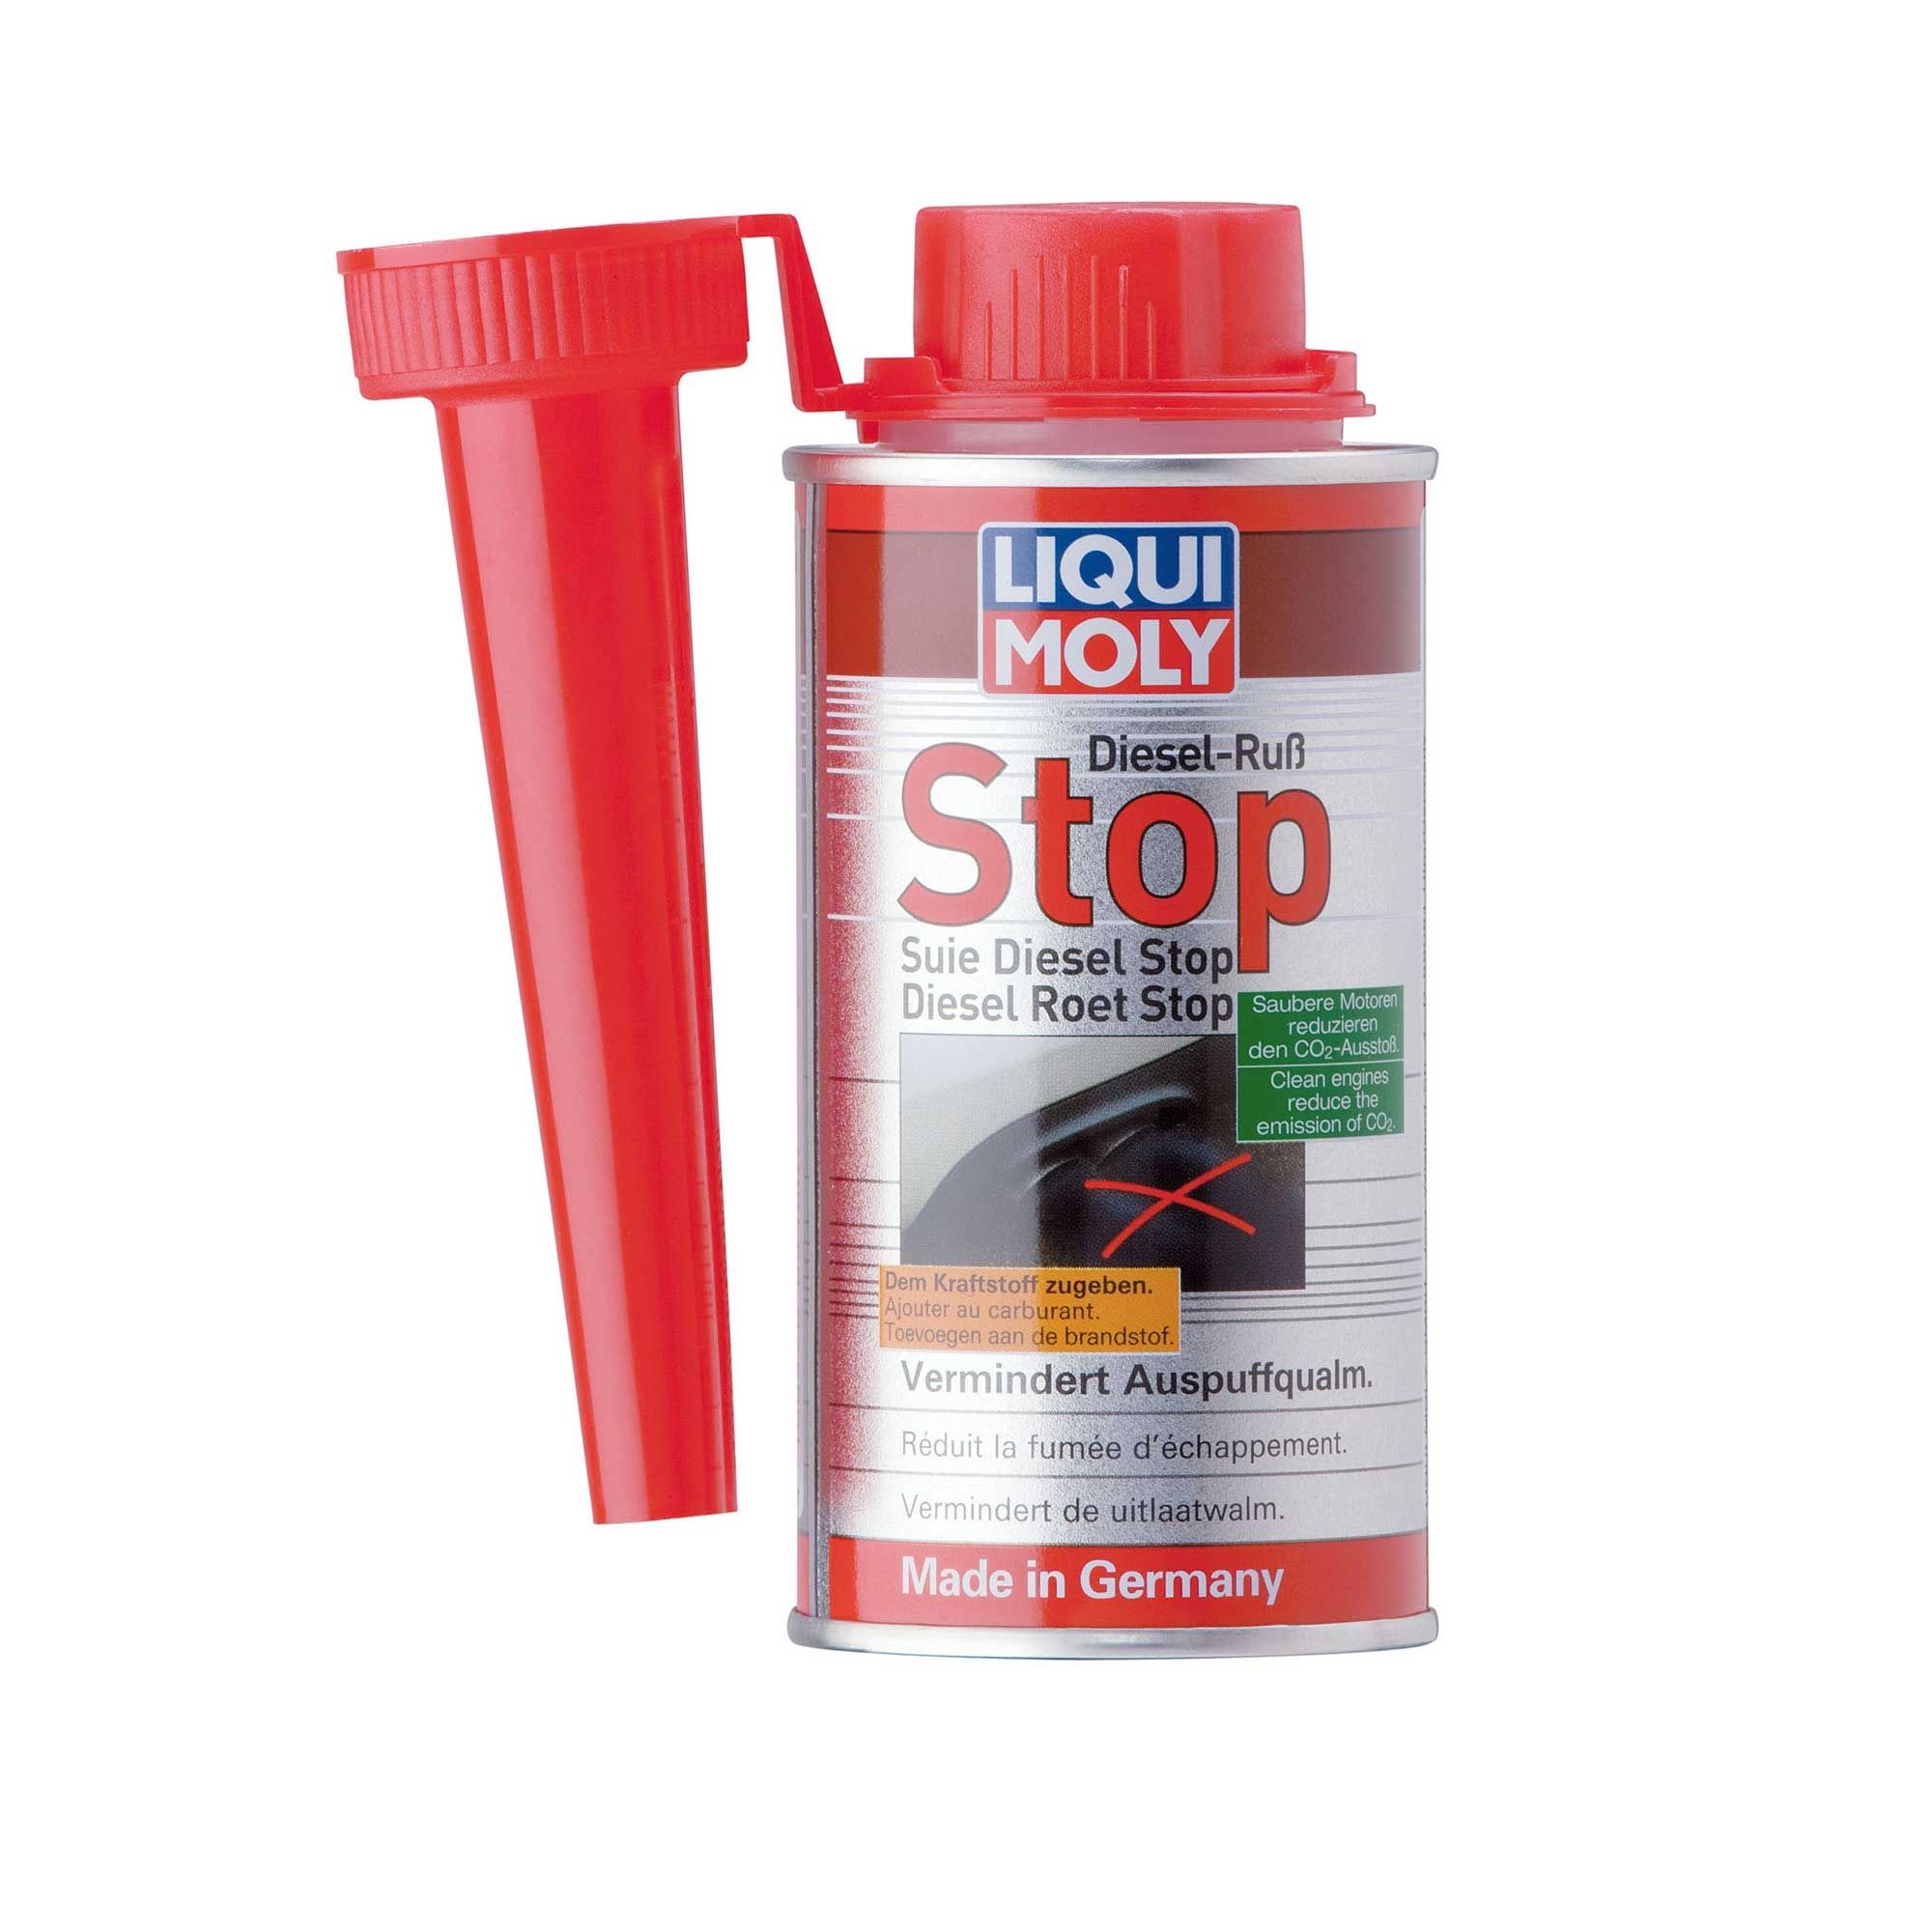 Buy Liqui Moly Diesel Smoke Stop 150 ml at ATO24 ❗